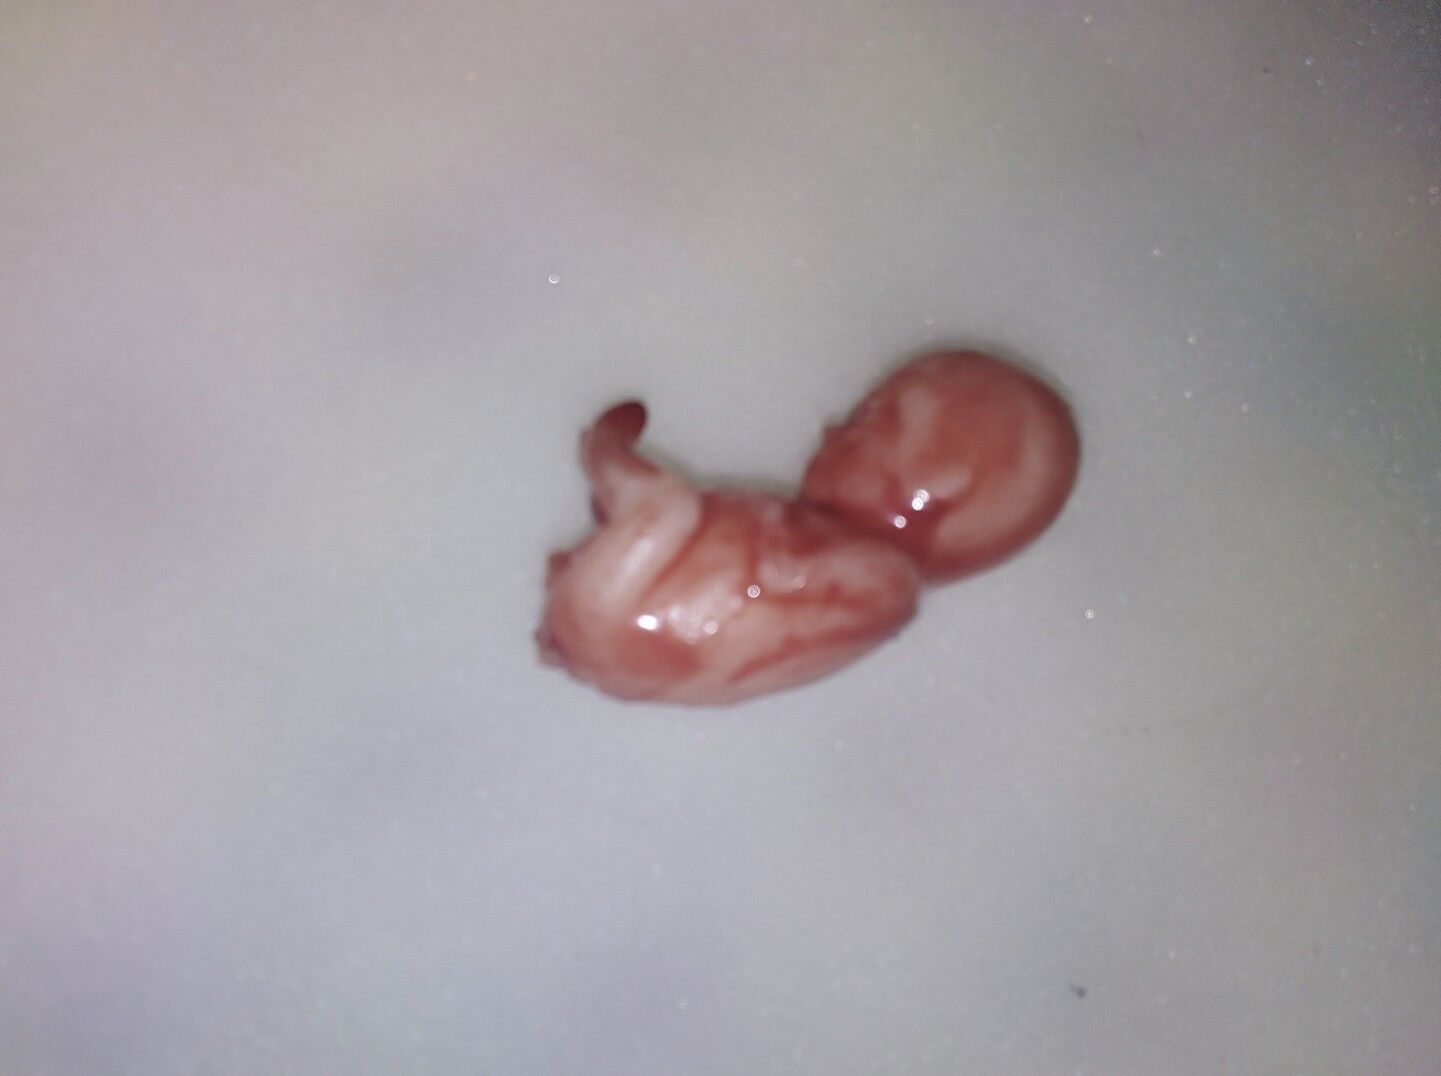 Horror movie prop silicone fetus human baby gore  goth freakshow weird 